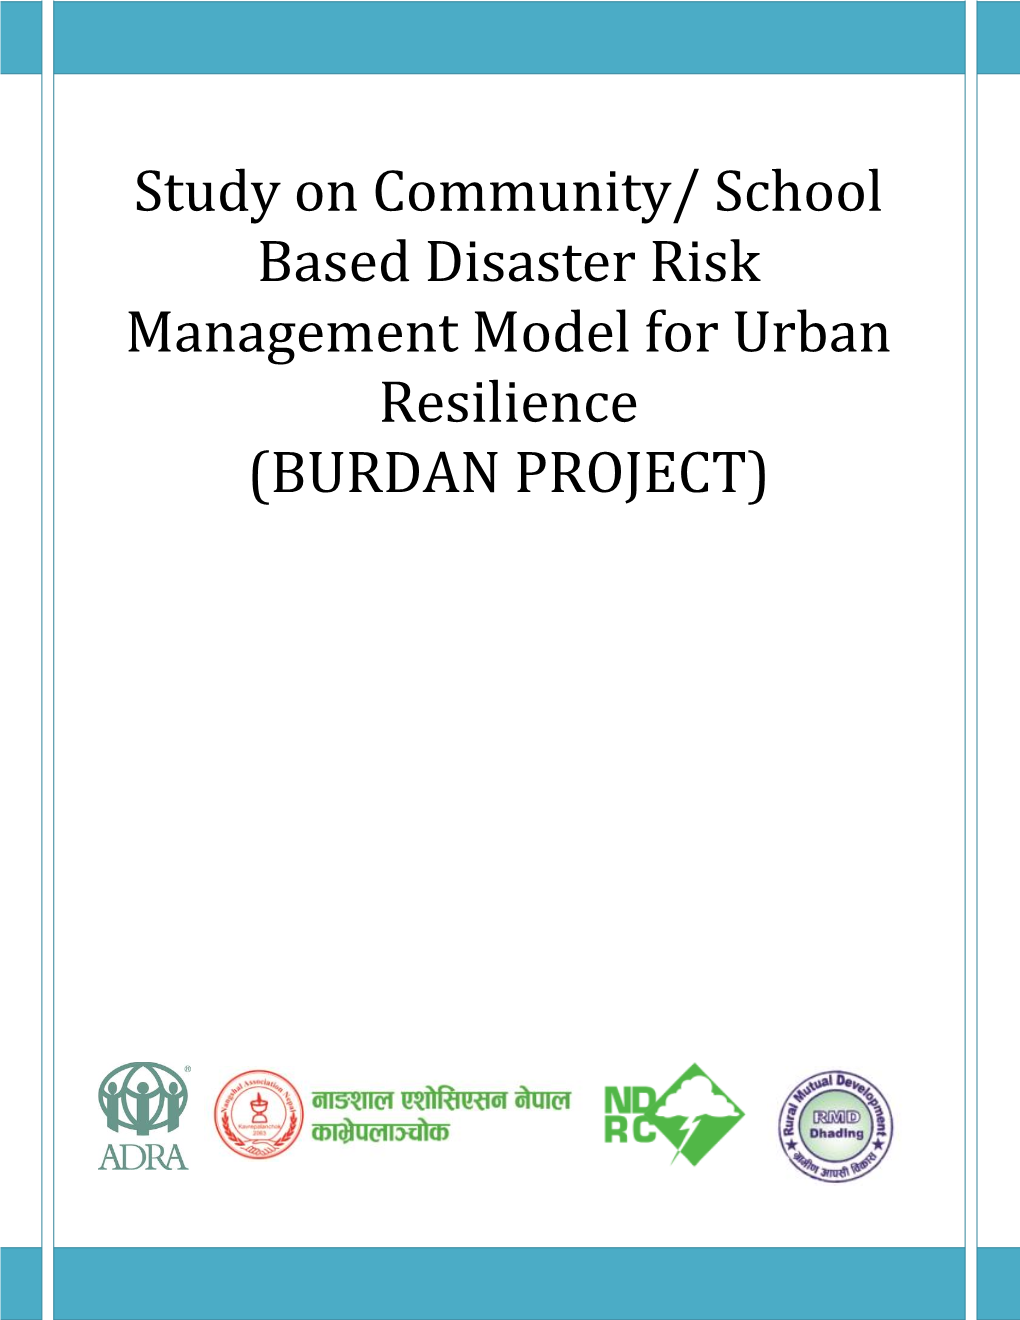 School Based Disaster Risk Management Model for Urban Resilience (BURDAN PROJECT)